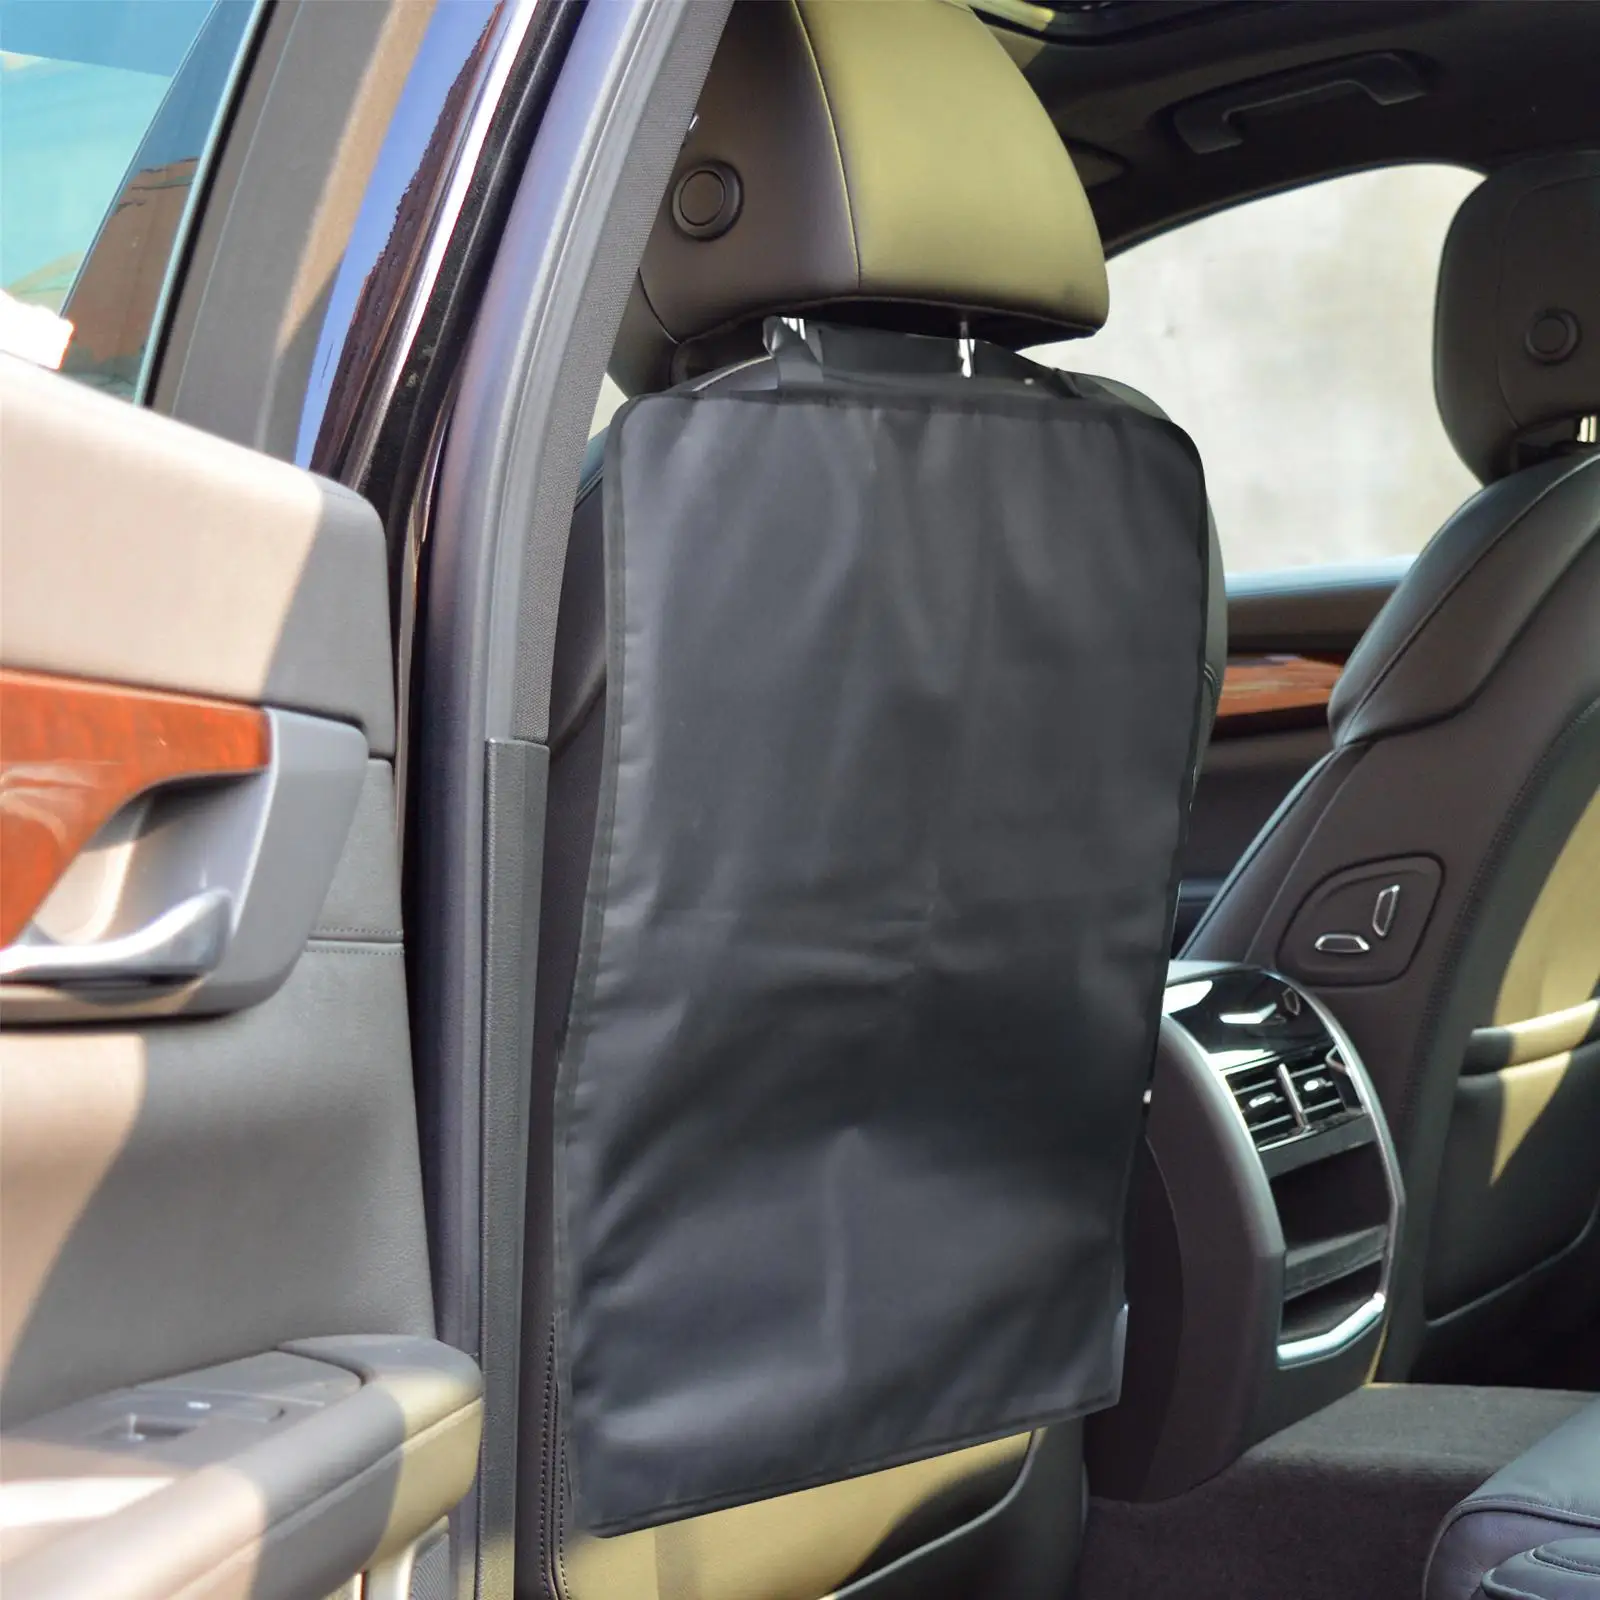 Kick Mats Waterproof Backseat Protector for Vehicles Most Suvs and Vans